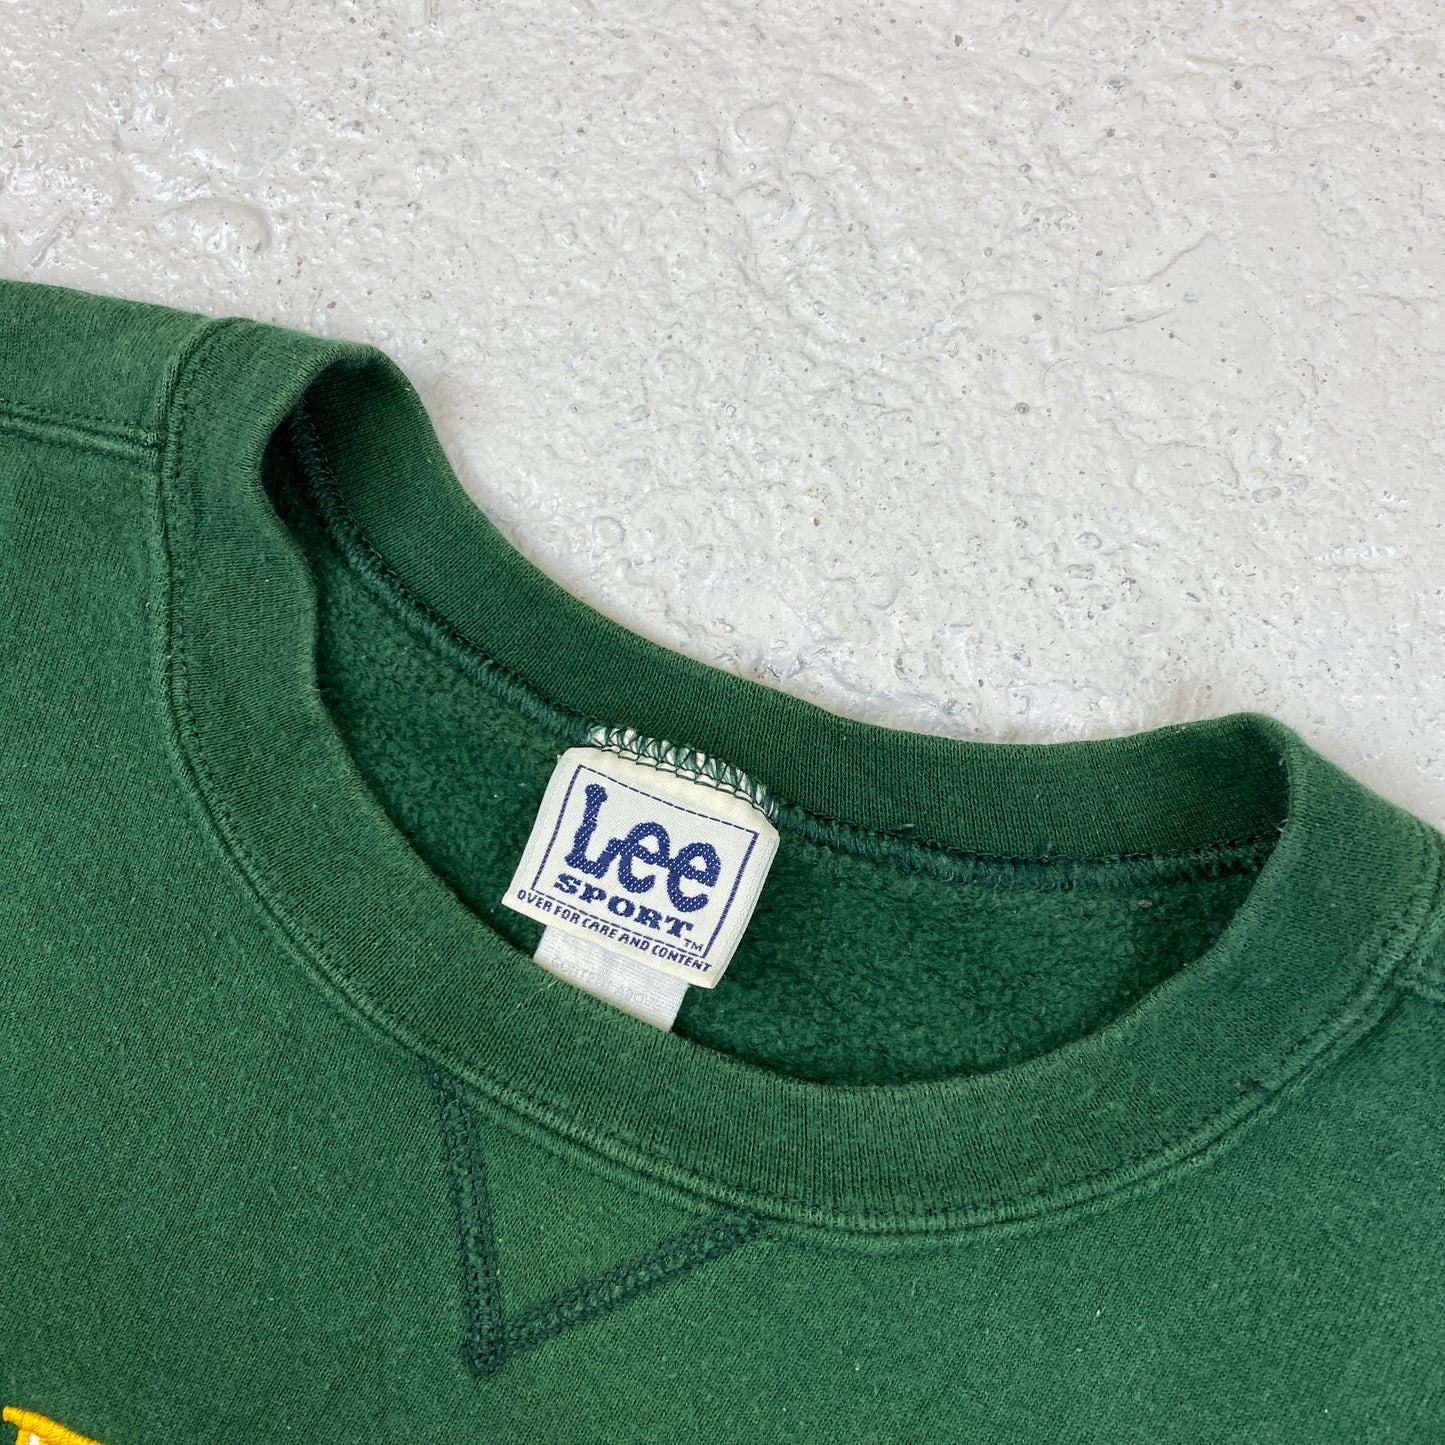 Lee Green Bay Packers heavyweight sweater (XL-XXL)